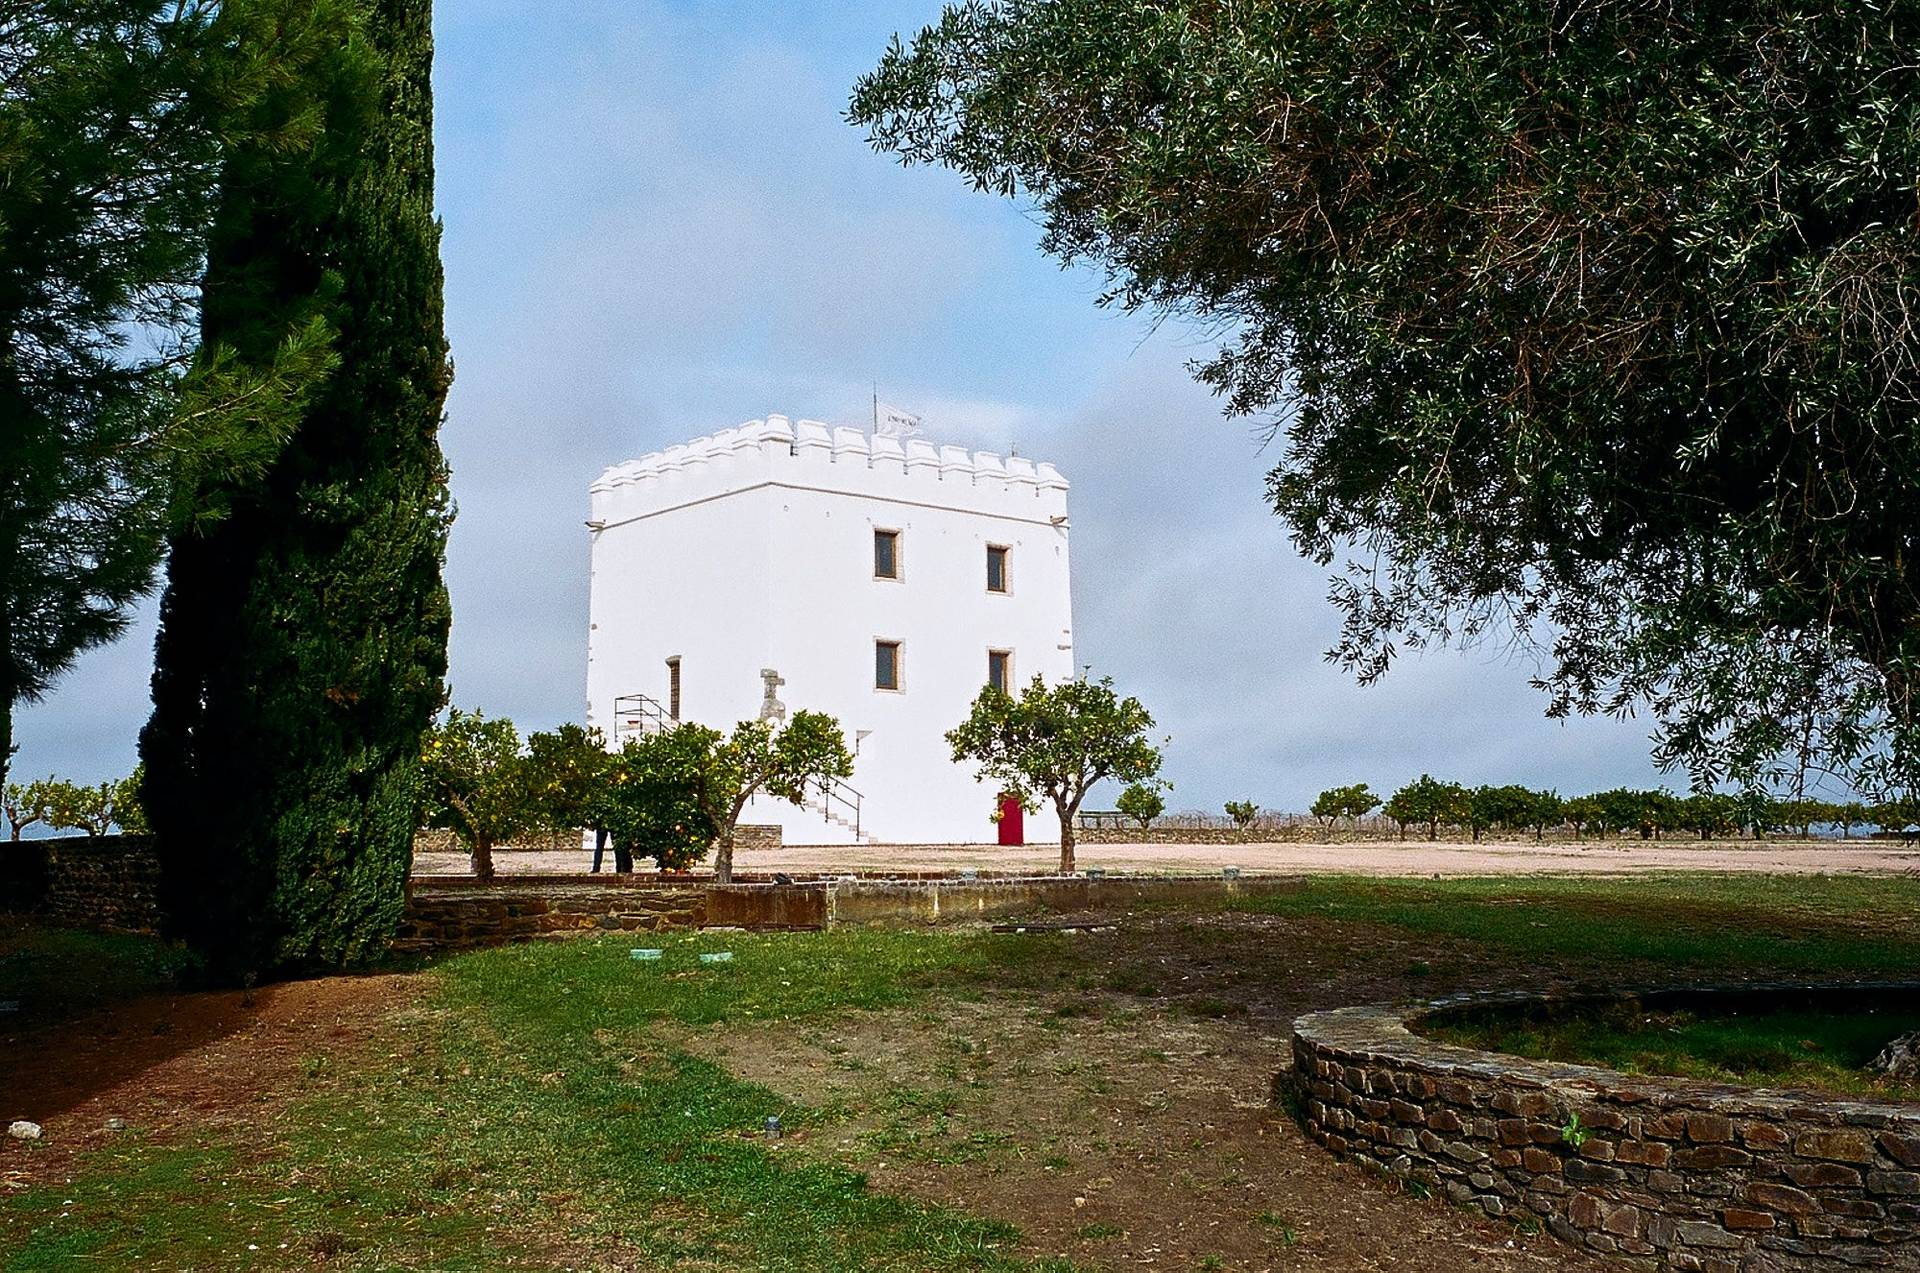 esporão olive oil farm and winery in alentejo